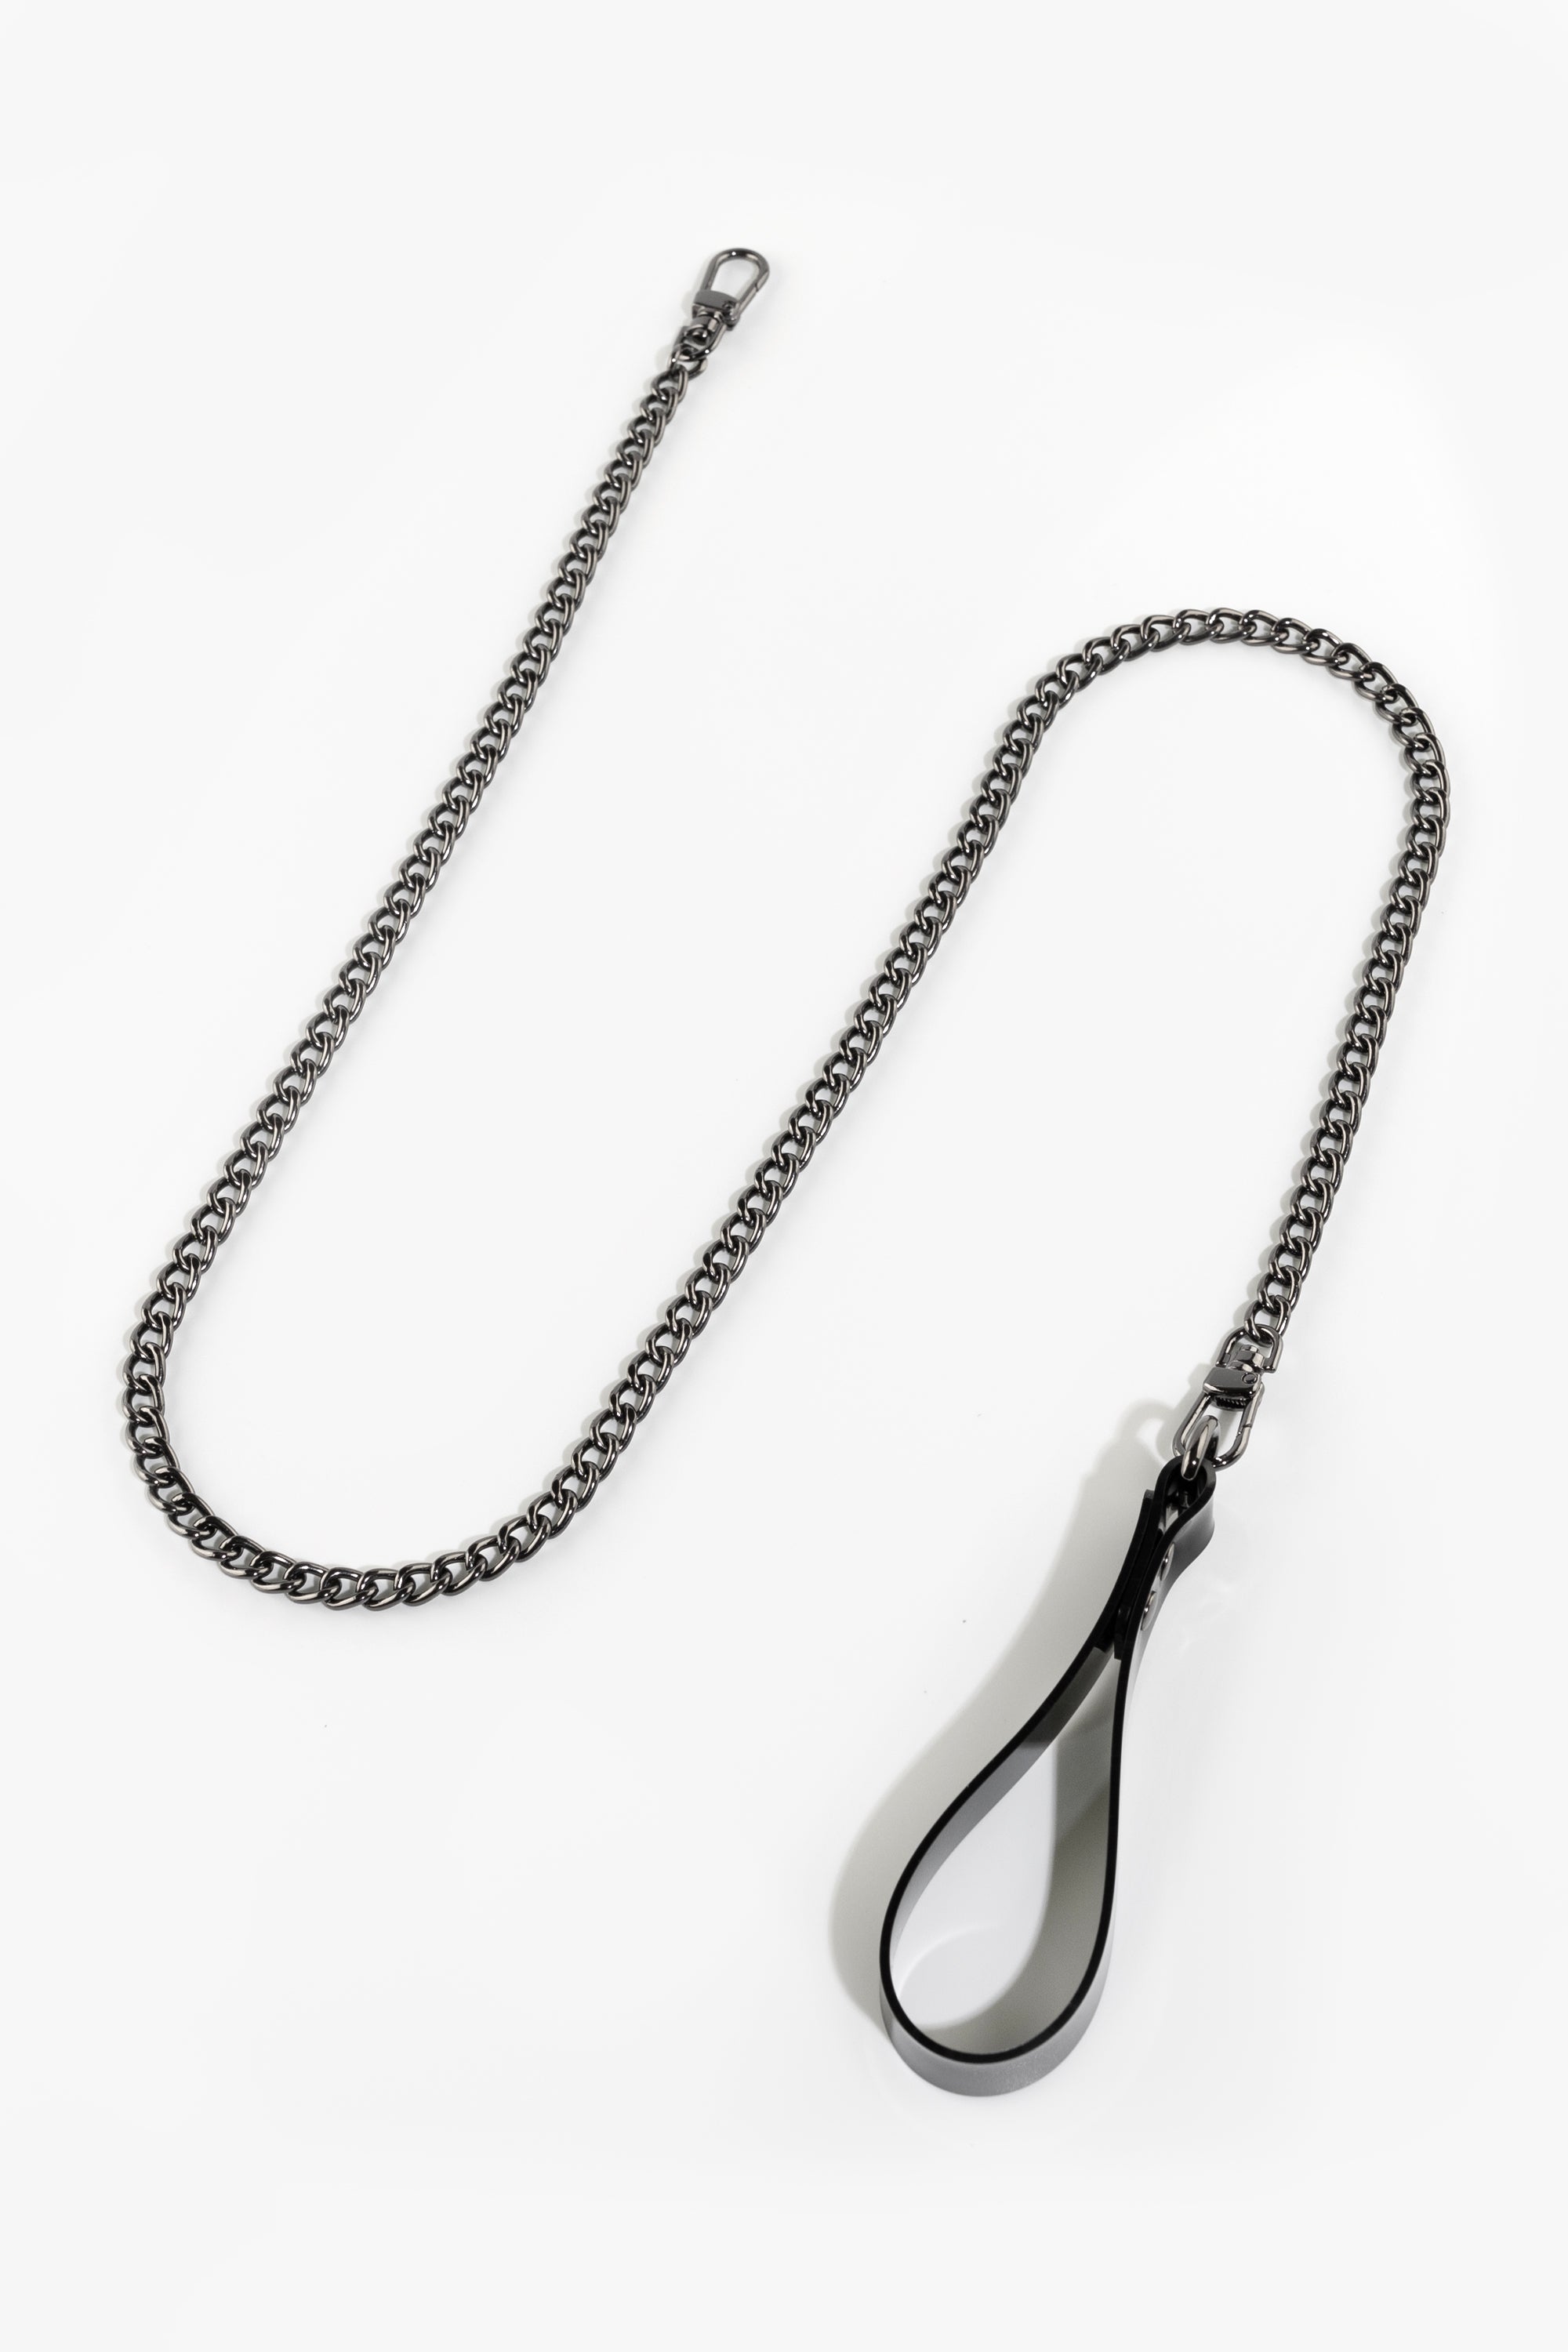 Chain leash with PVC loop, black/black